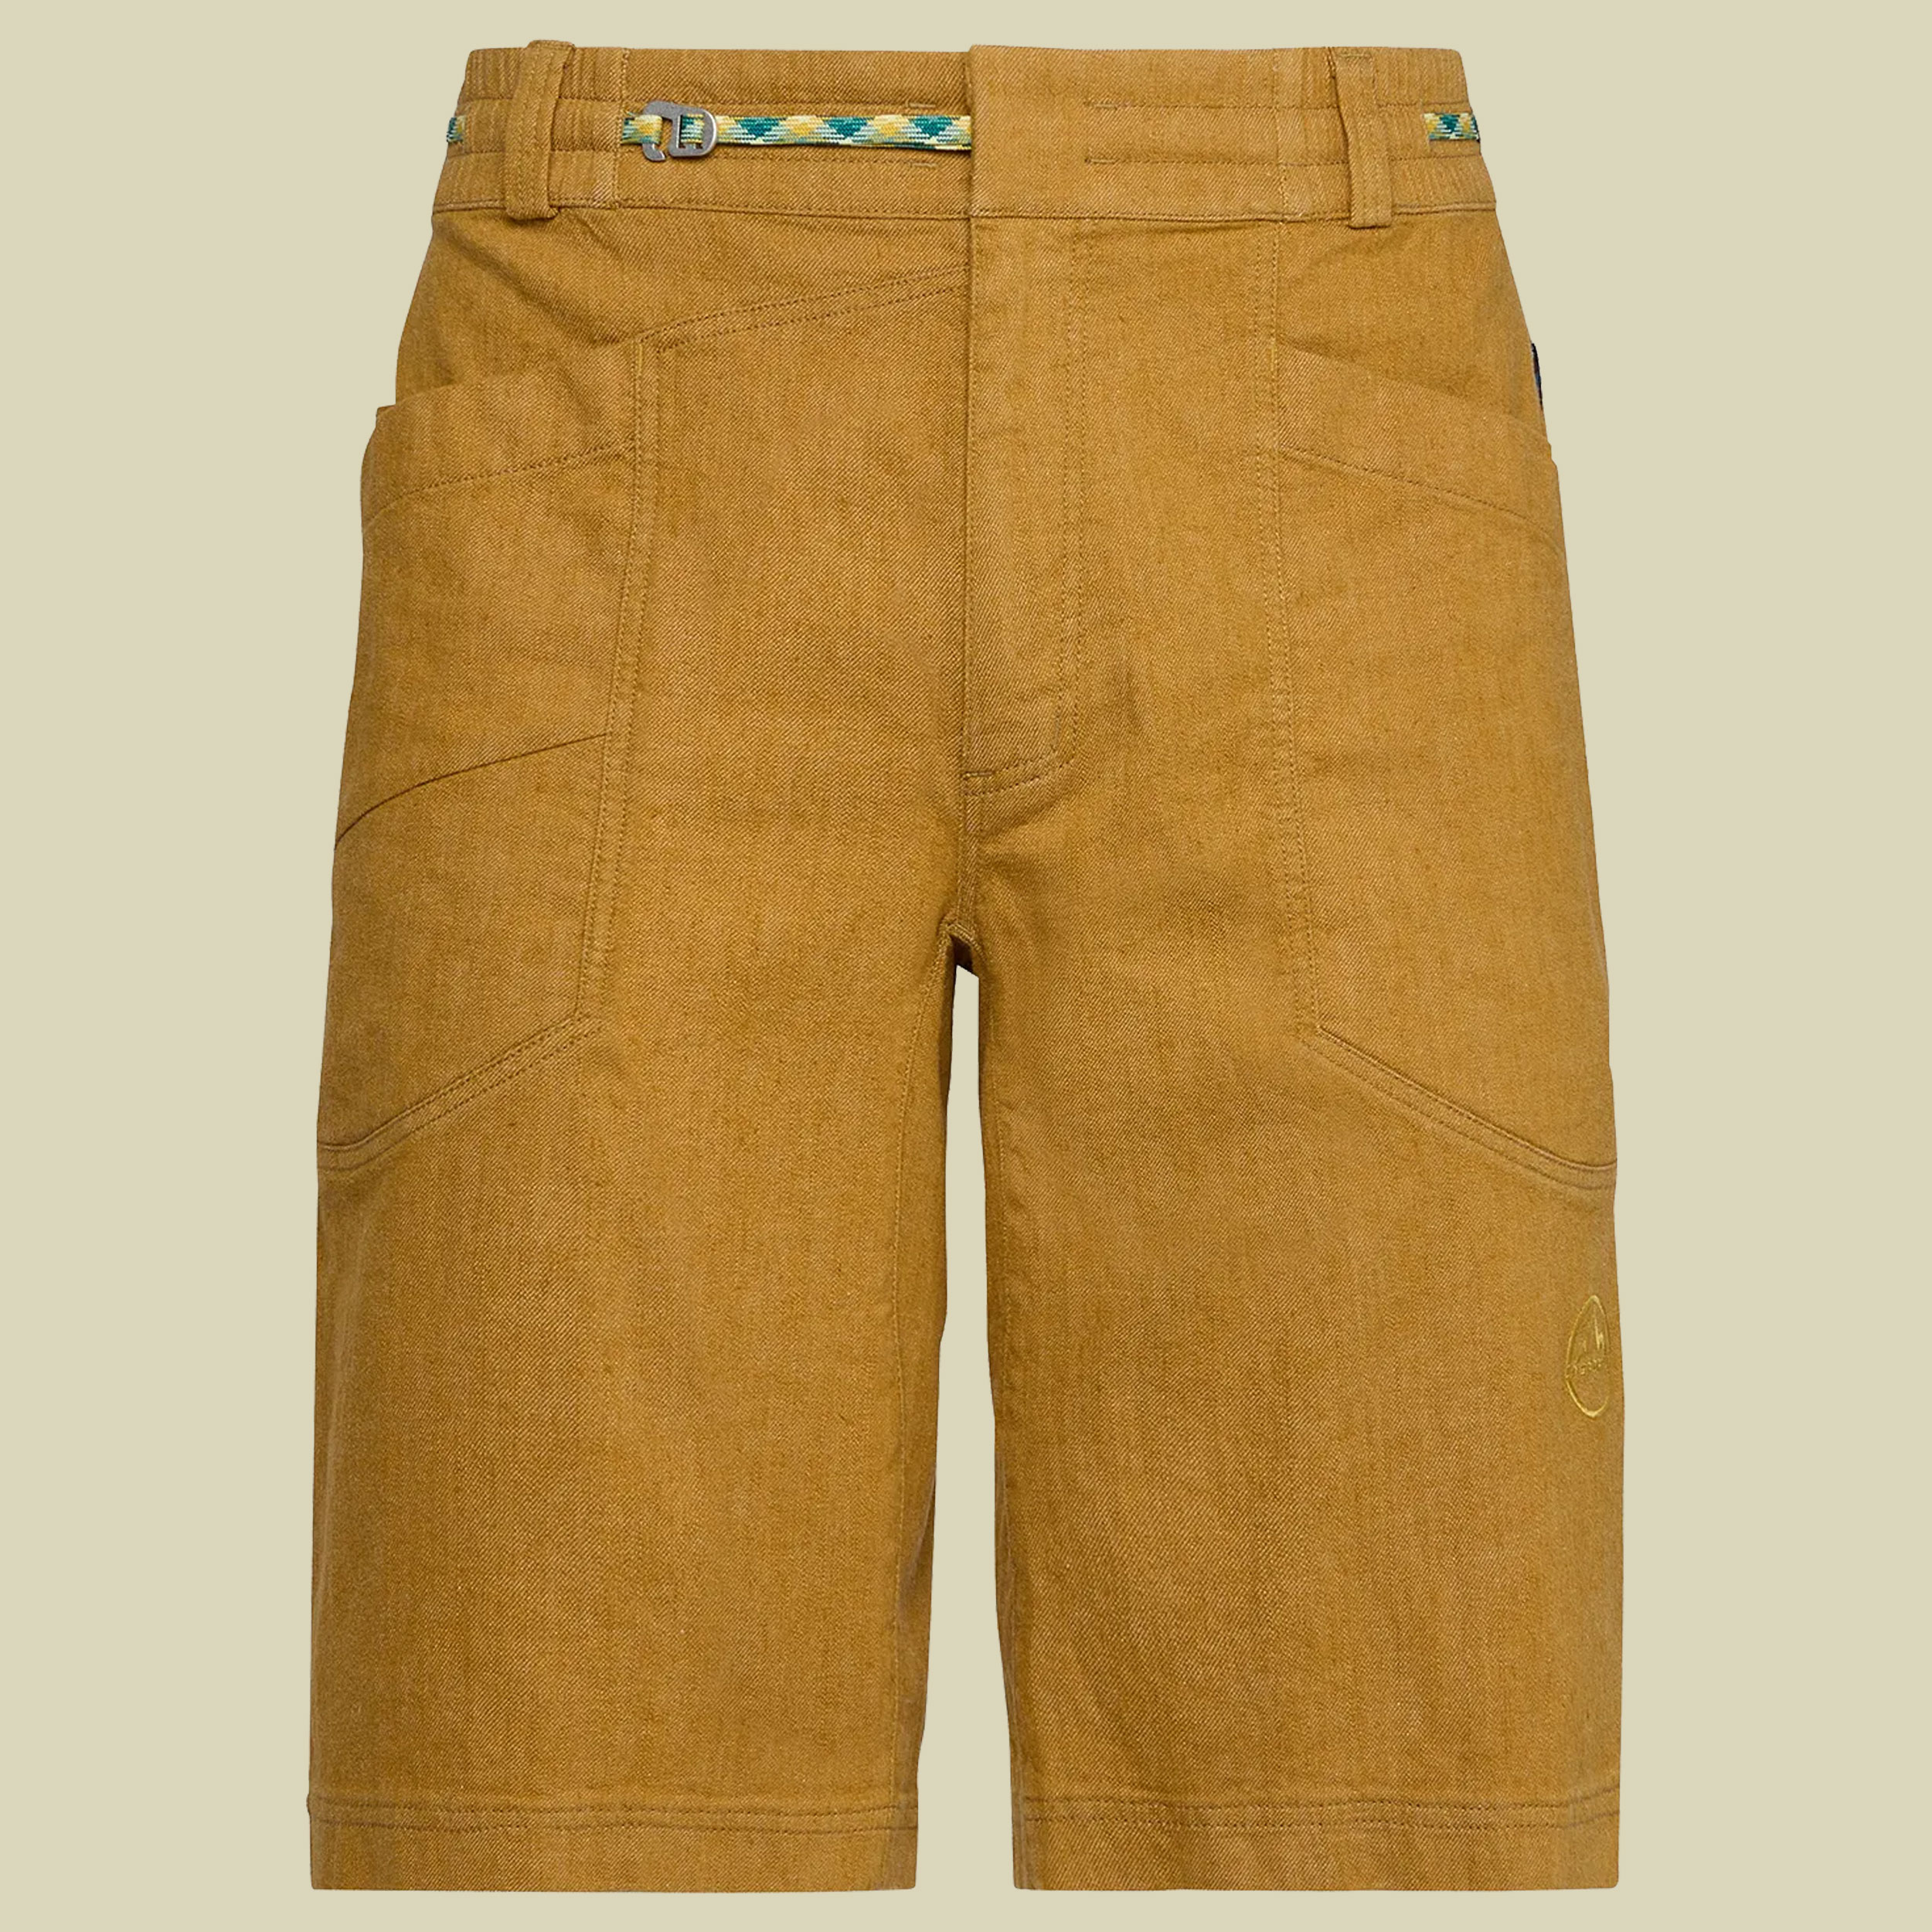 Sierra Rock Short Men XL gelb - savana